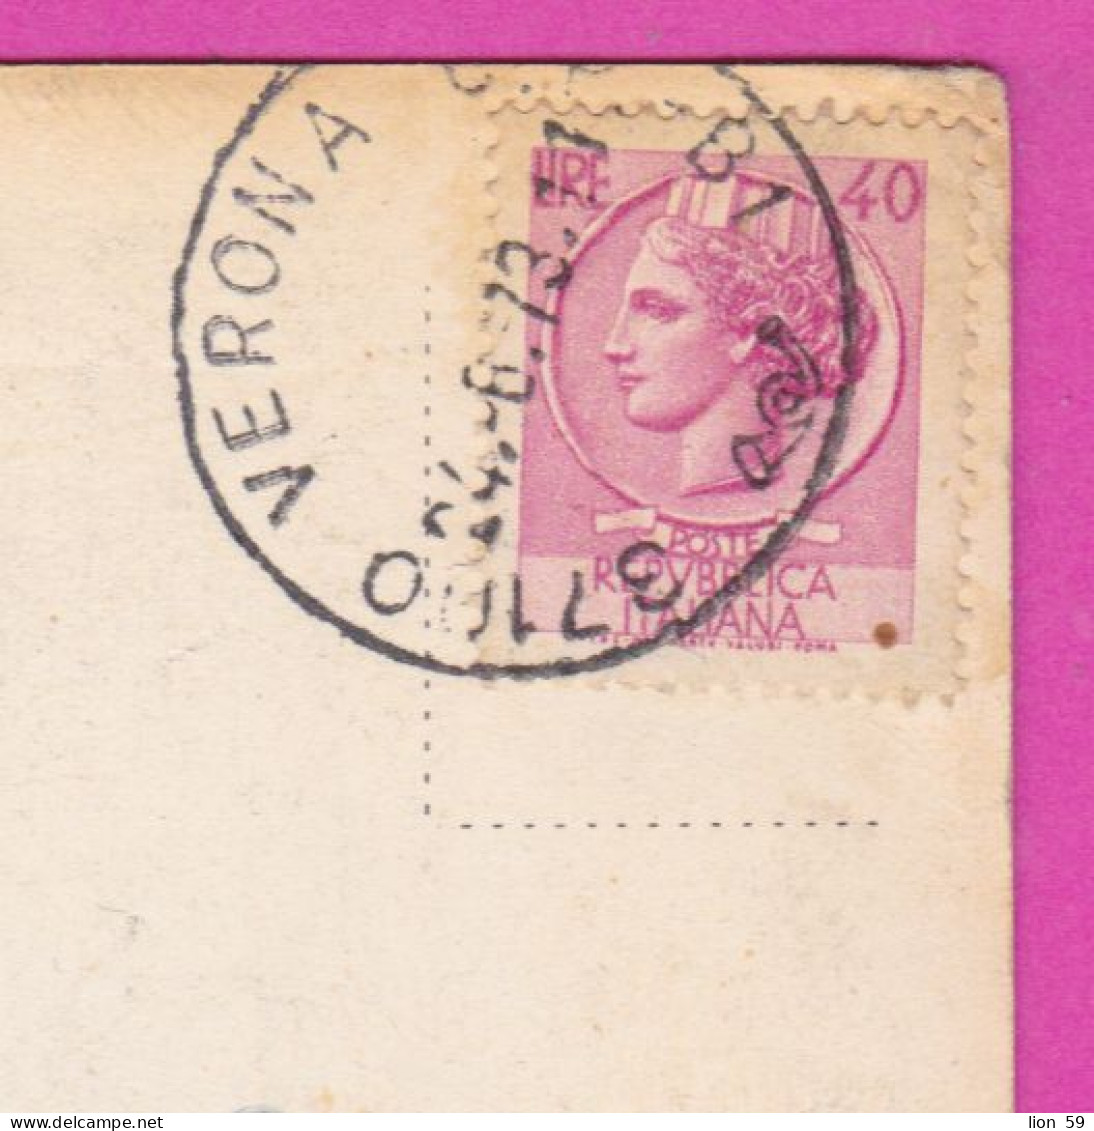 293952 / Italy - VERONA  - Arca Di Cansignorio PC 1973 USED - 40 L Coin Of Syracuse Italia Italie Italien - 1971-80: Storia Postale